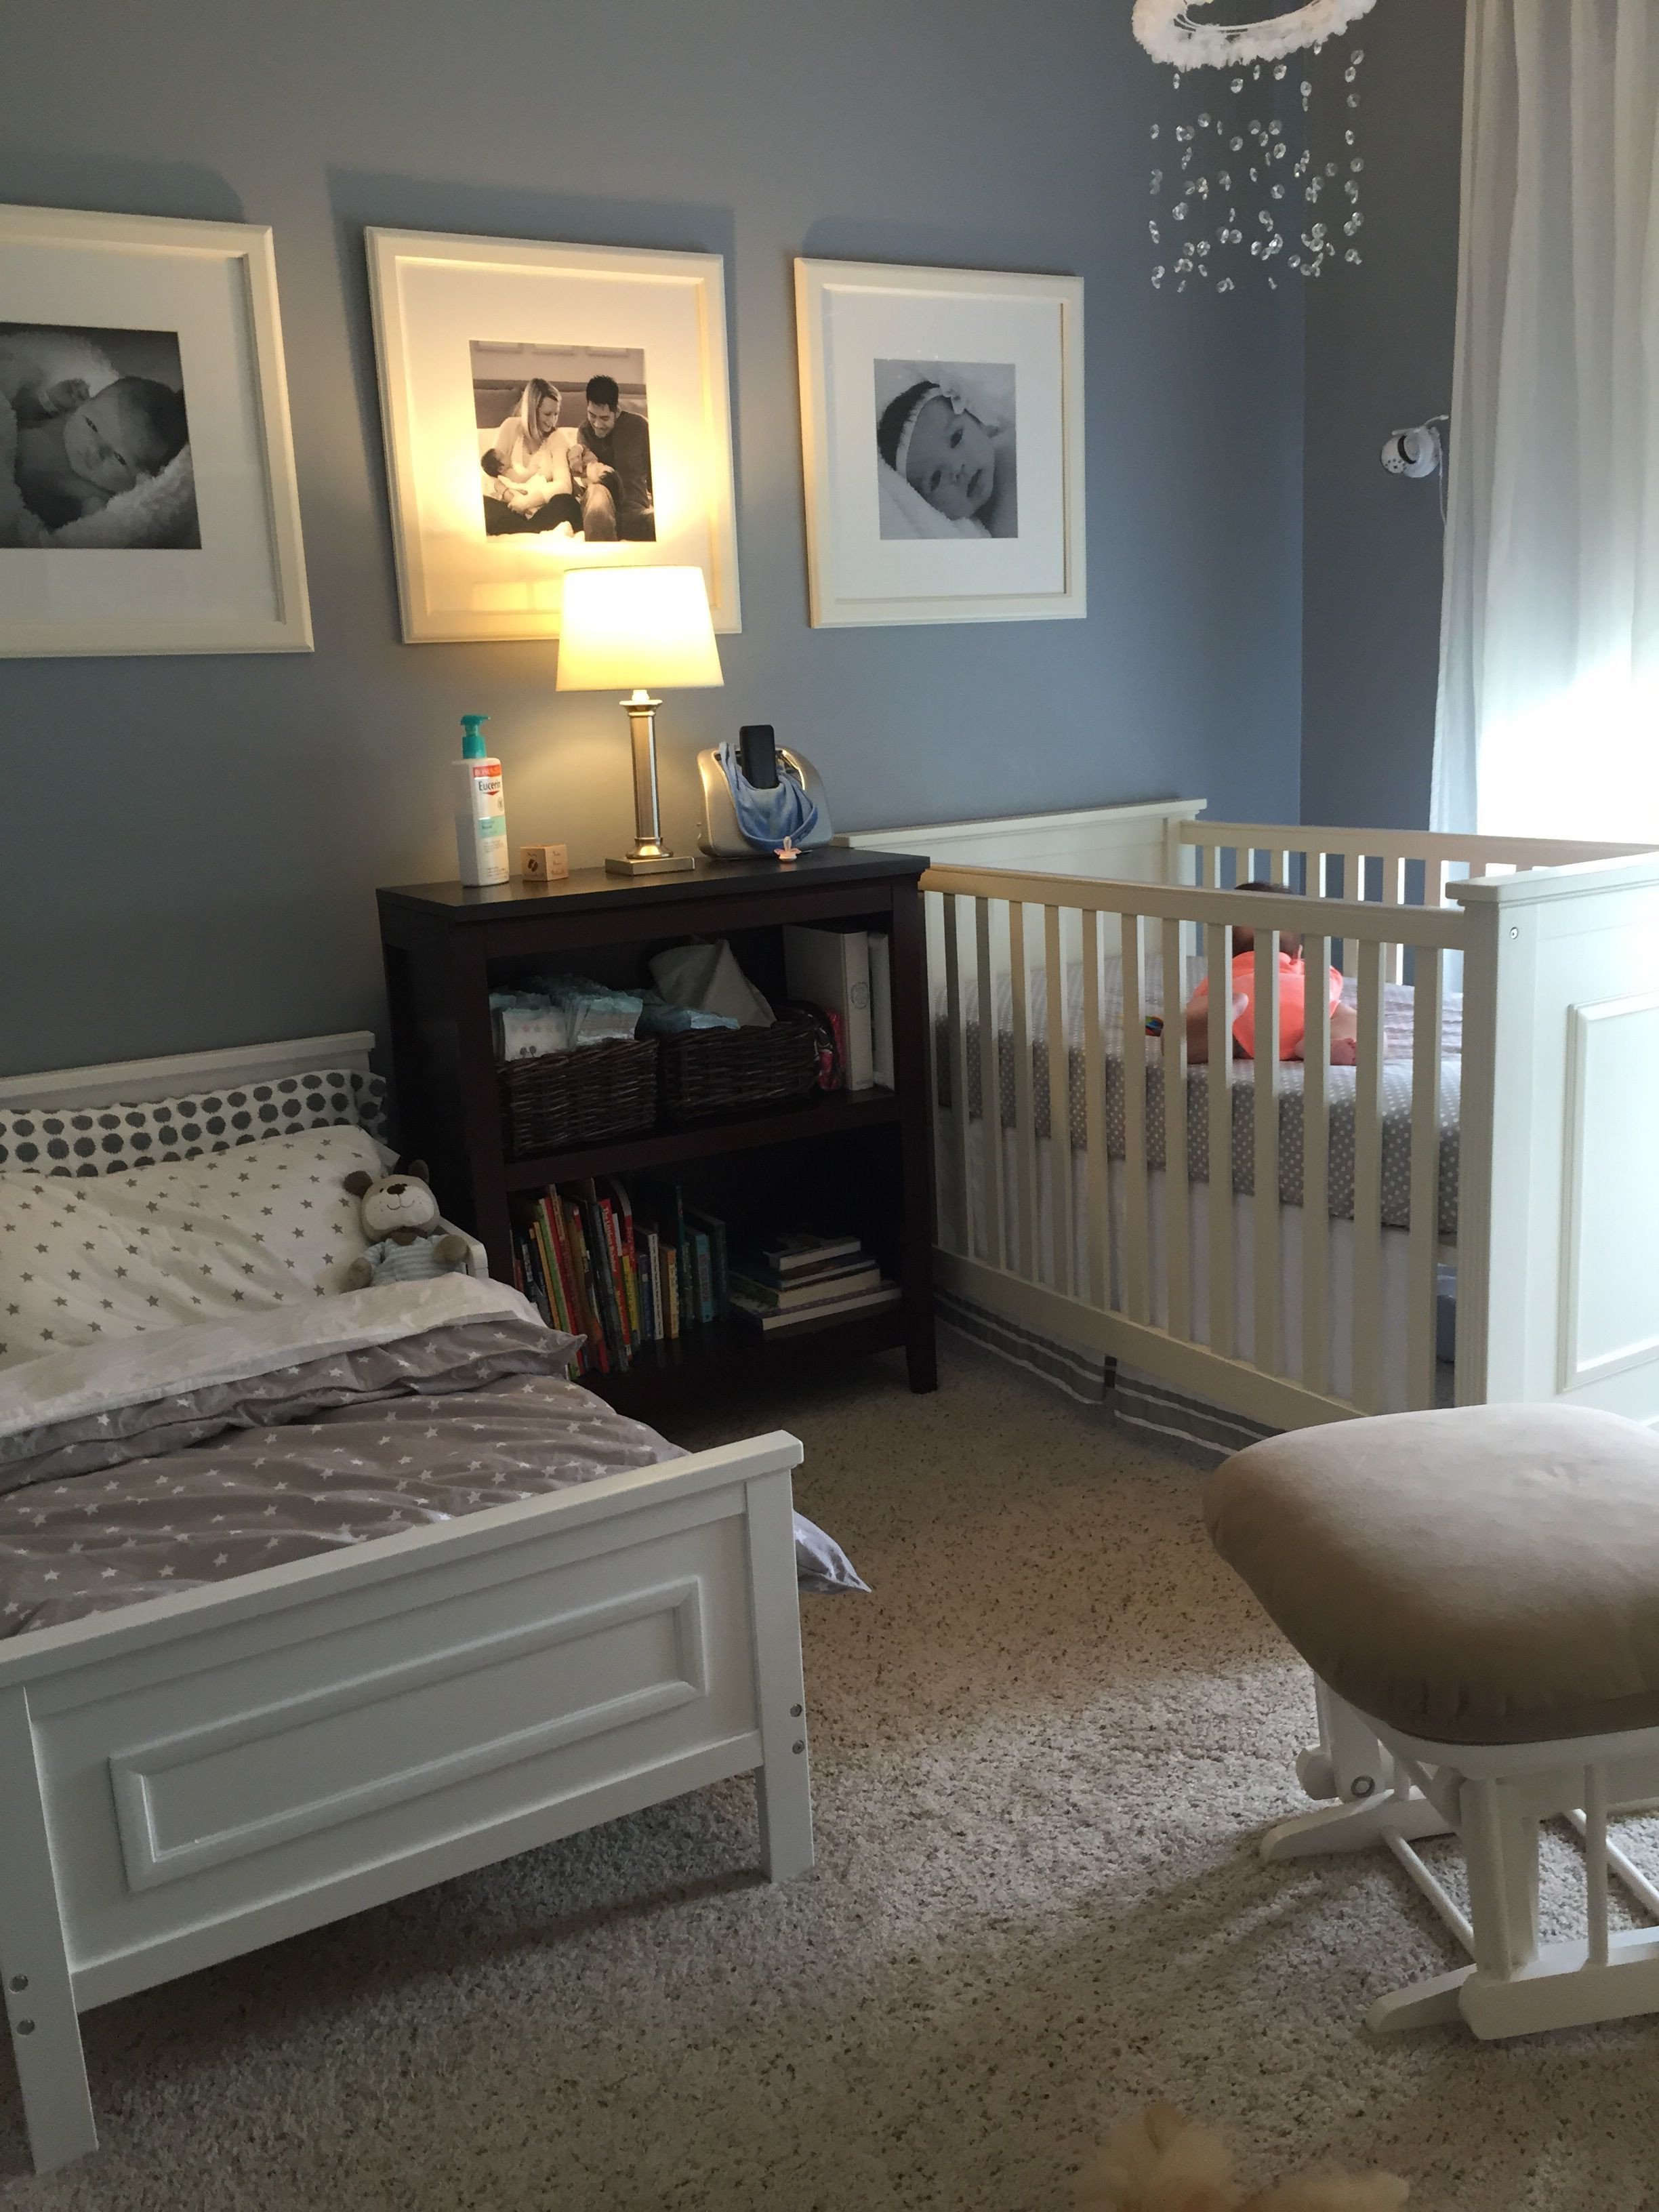 Toddler Boy Room Decor Ideas Fresh Neutral Room for toddler Boy and Baby Girl Boy and Girl D Bedroom Ideas